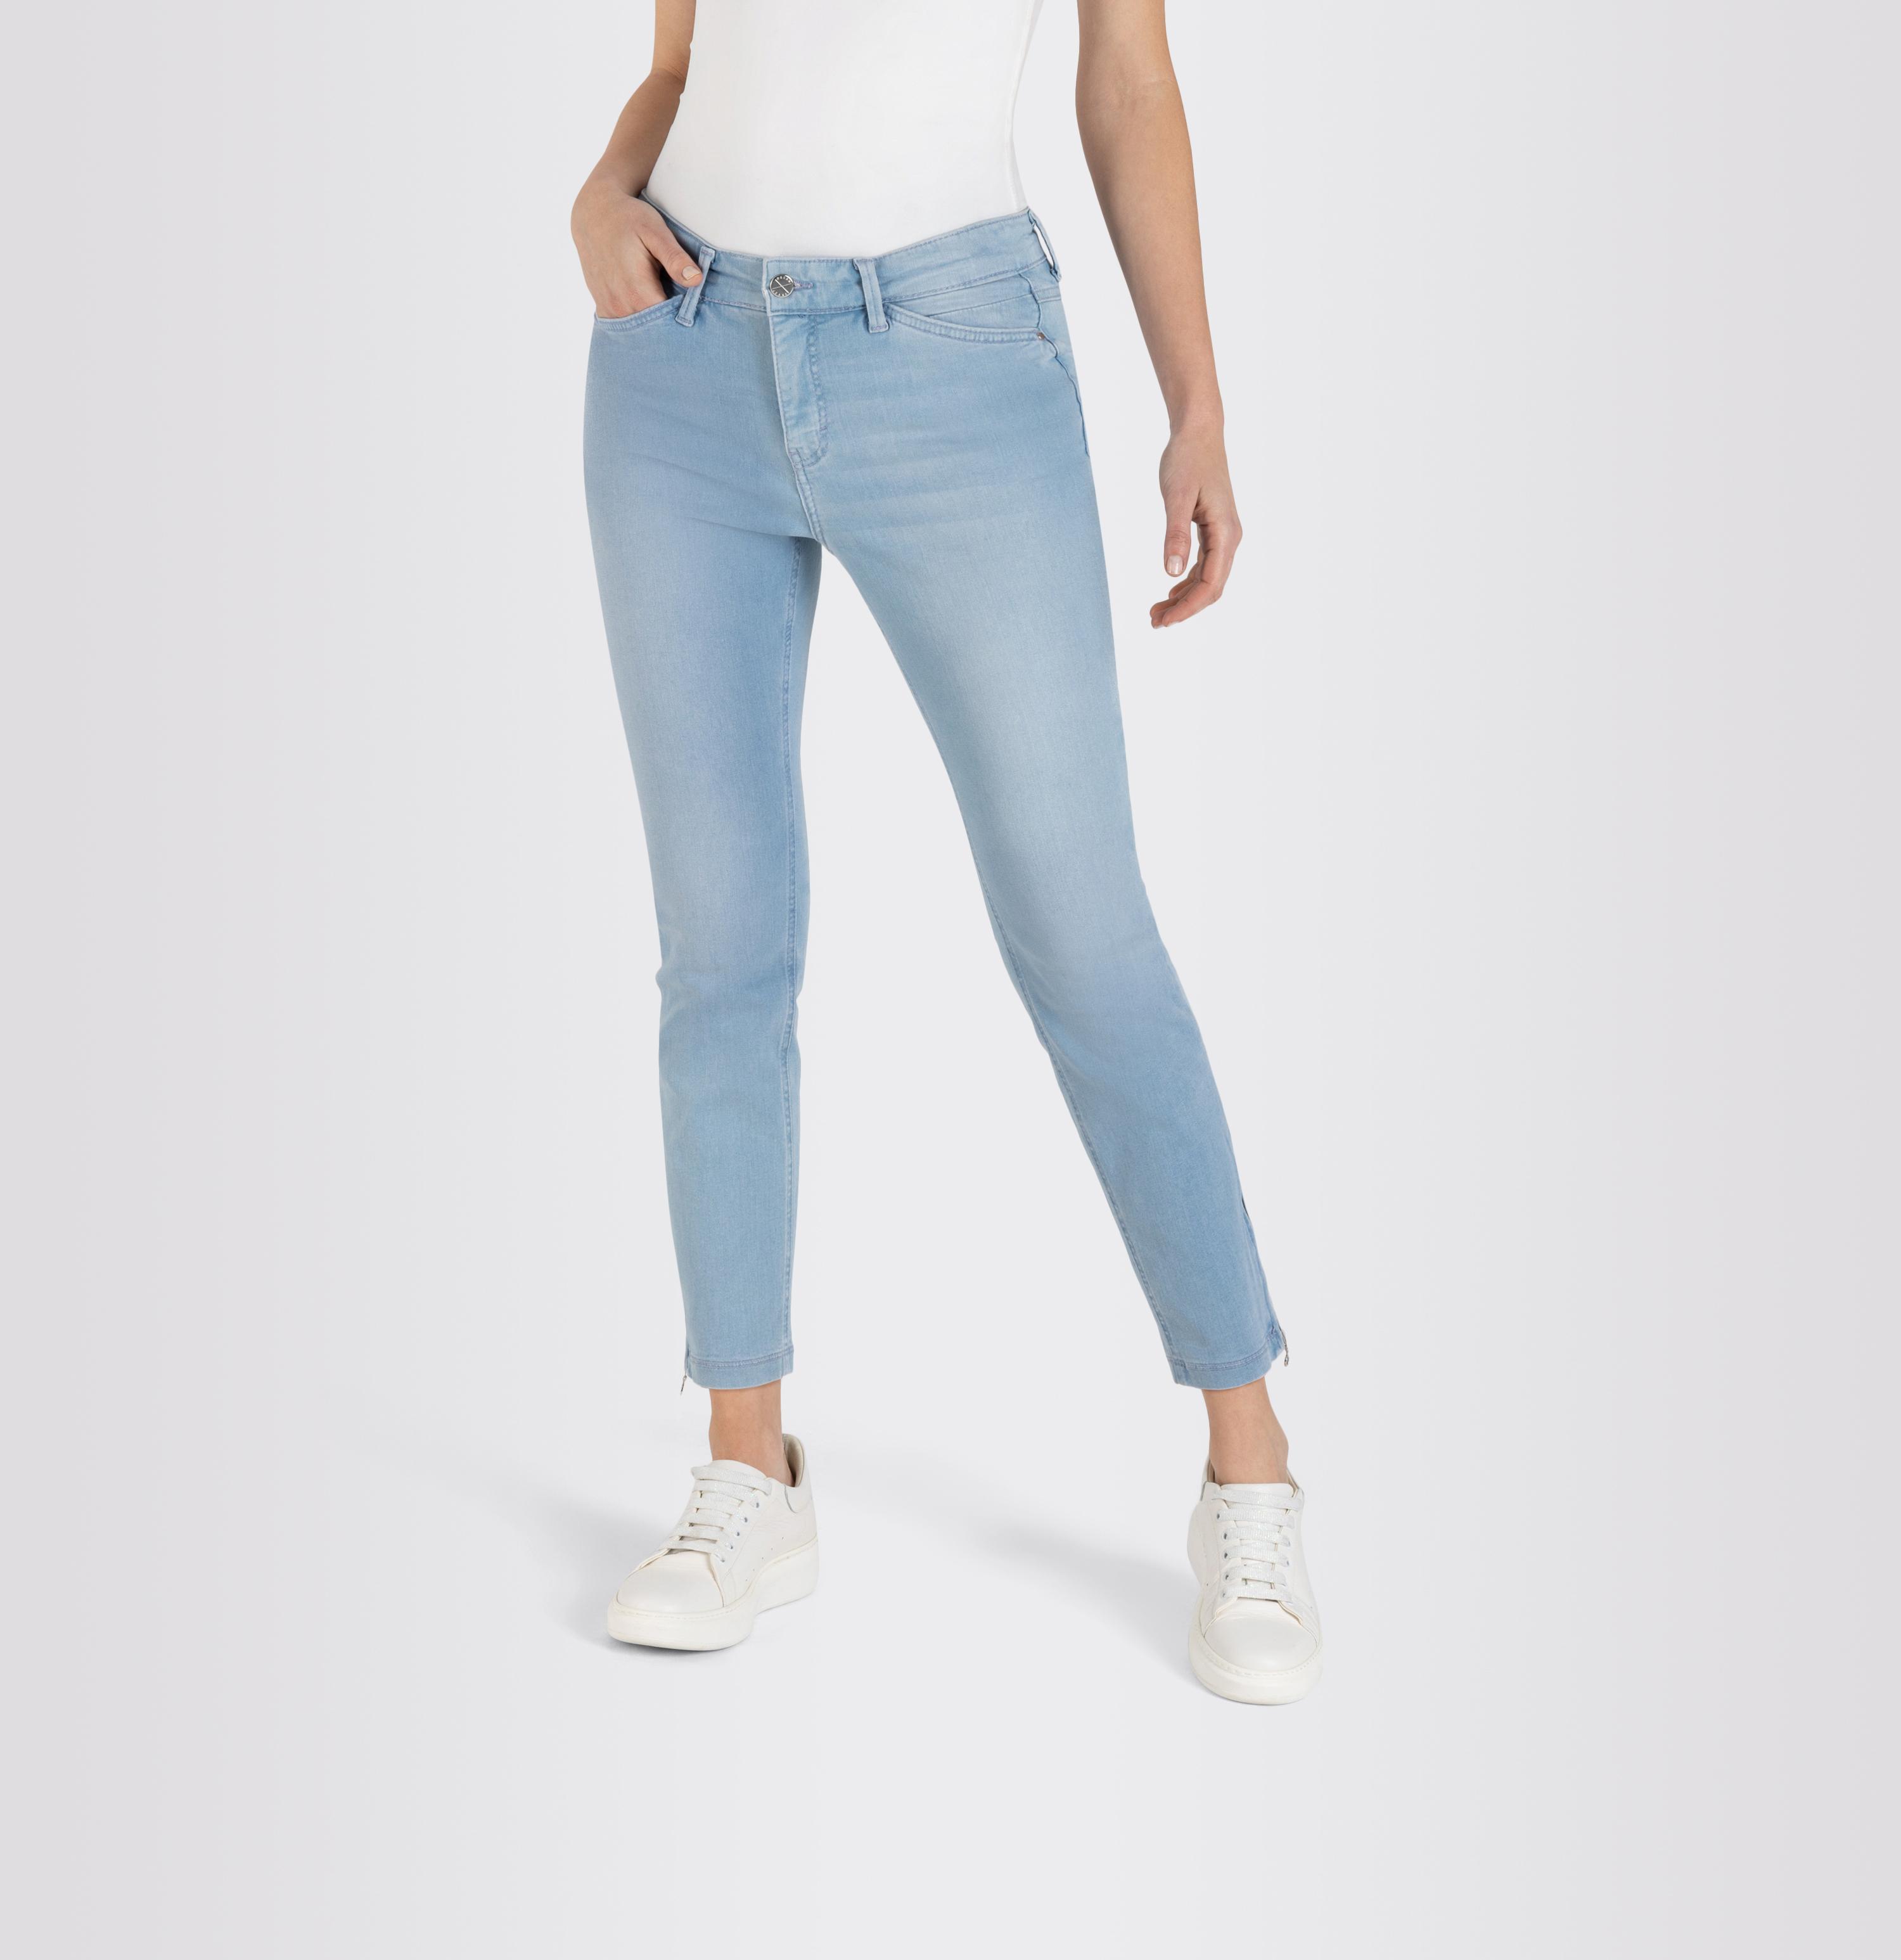 Damesbroek, Dream Chic, blauw D427 | NL - Jeans Shop